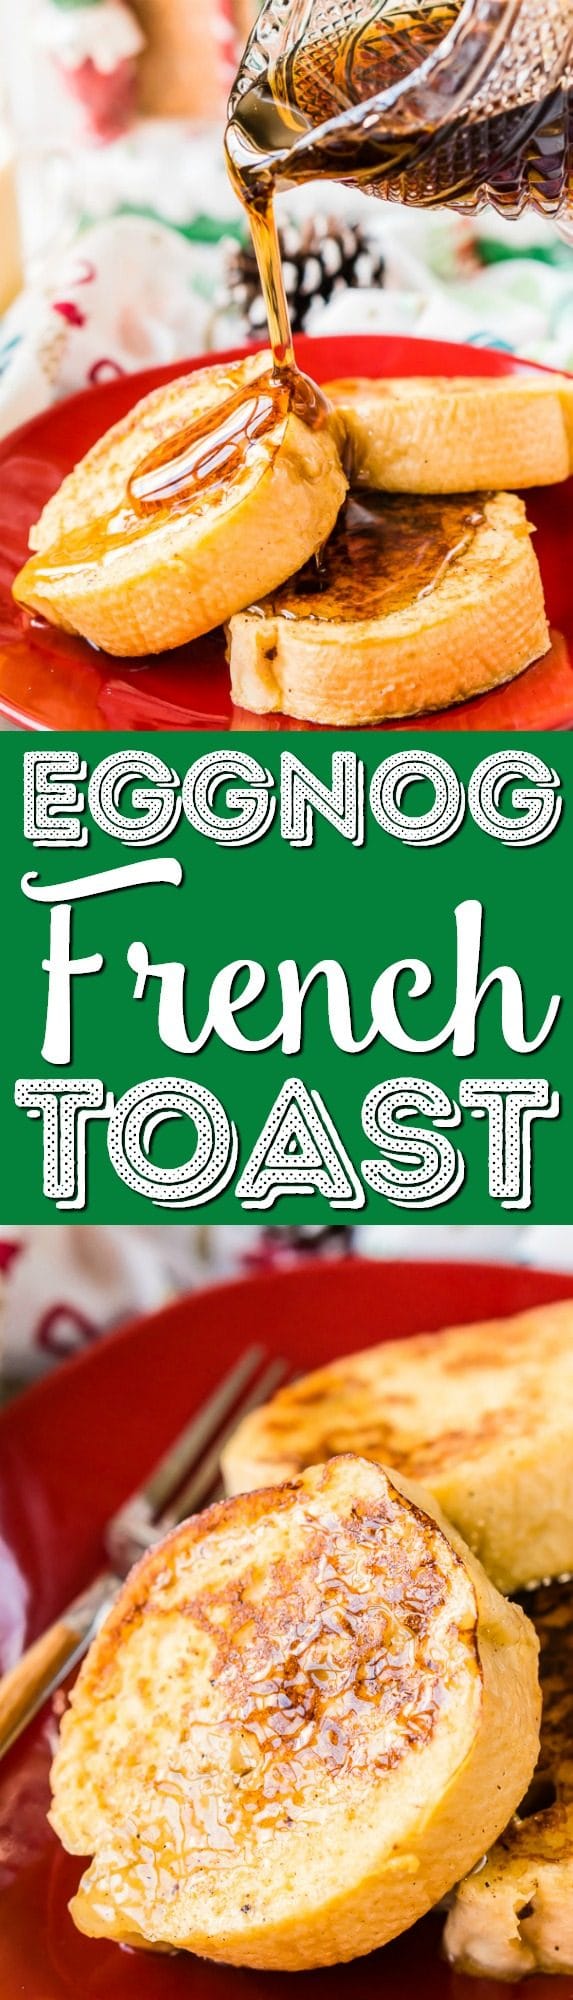 eggnog french toast